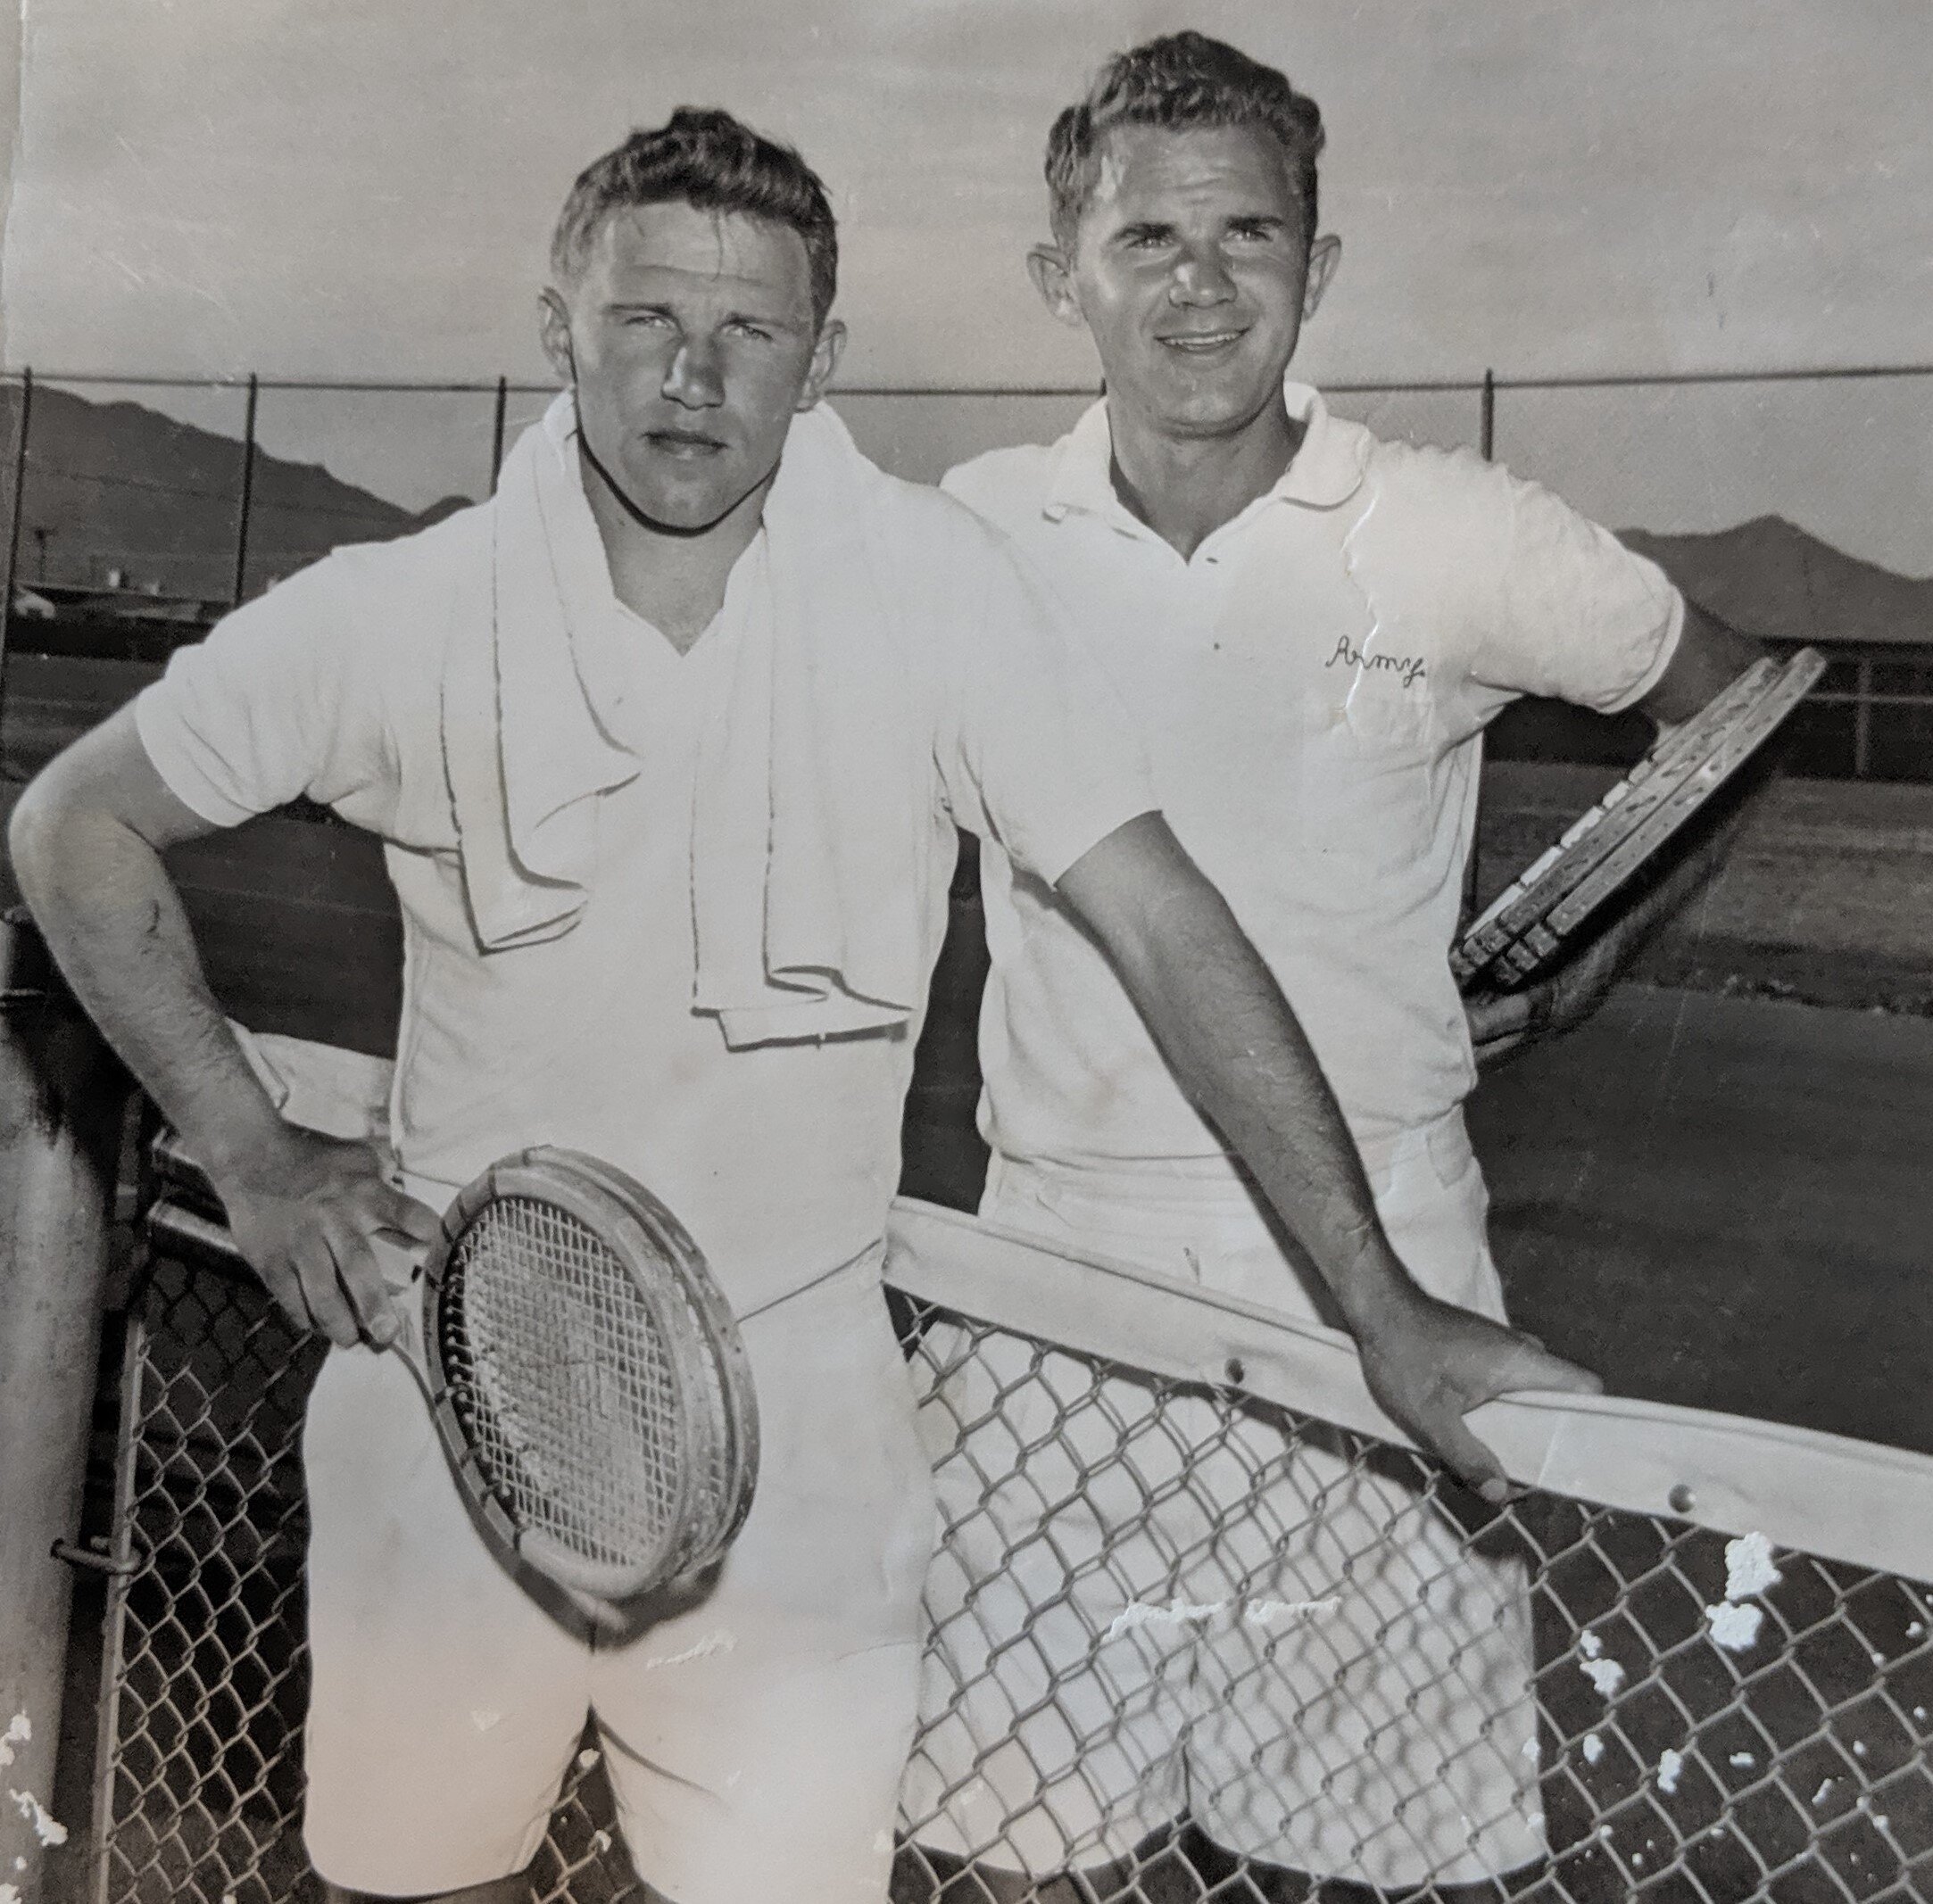 1958 tennis snyder as player (1).jpg